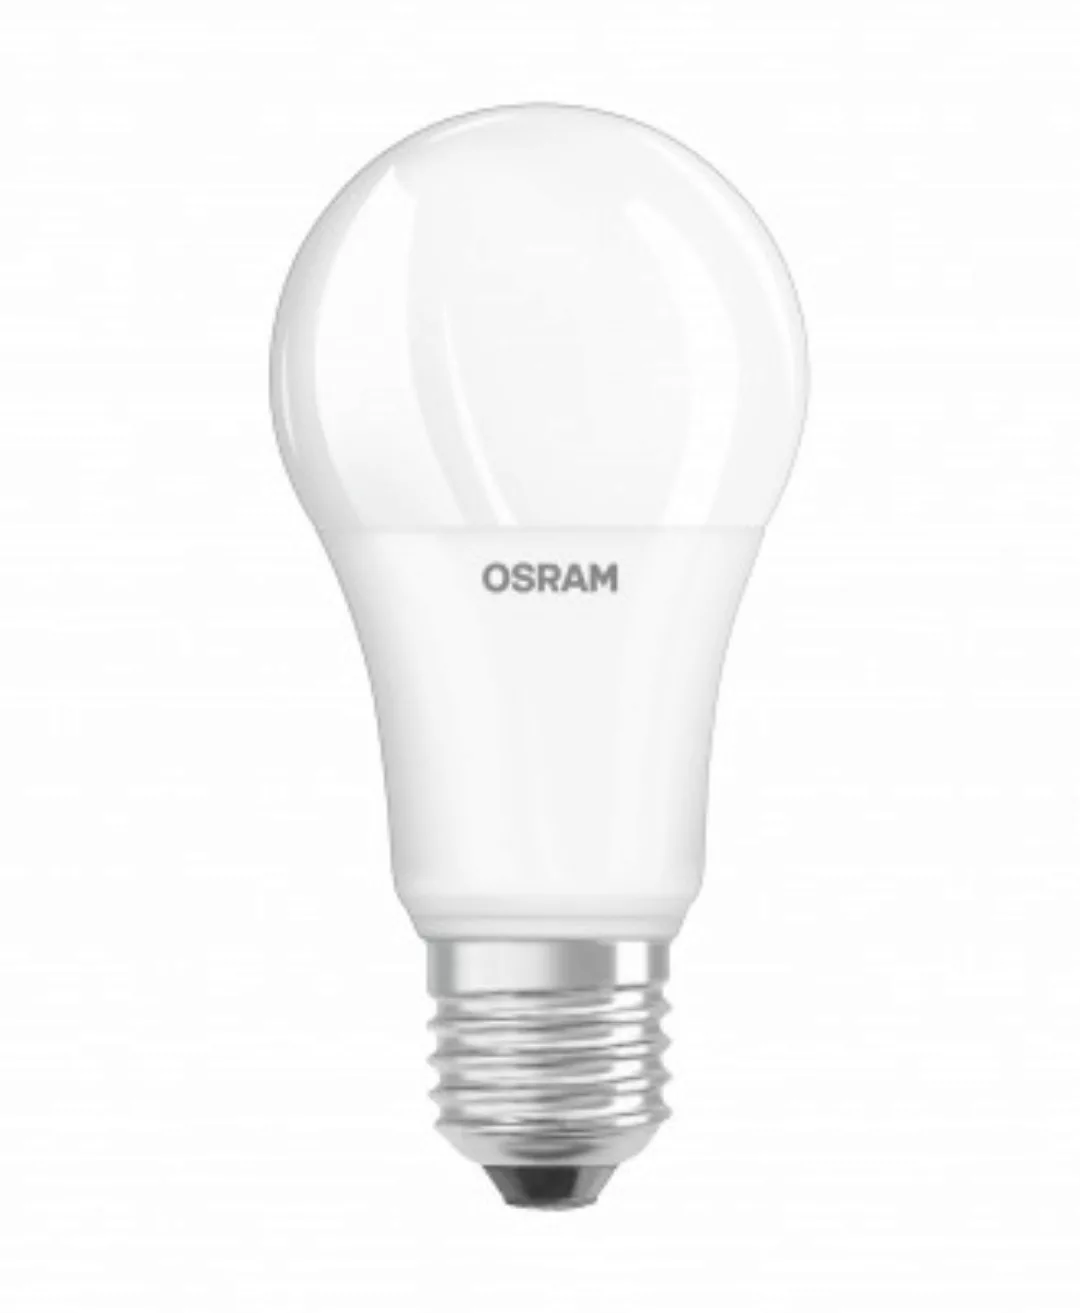 OSRAM LED STAR CLASSIC A 100 BLI K Warmweiß SMD Matt E27 Glühlampe günstig online kaufen